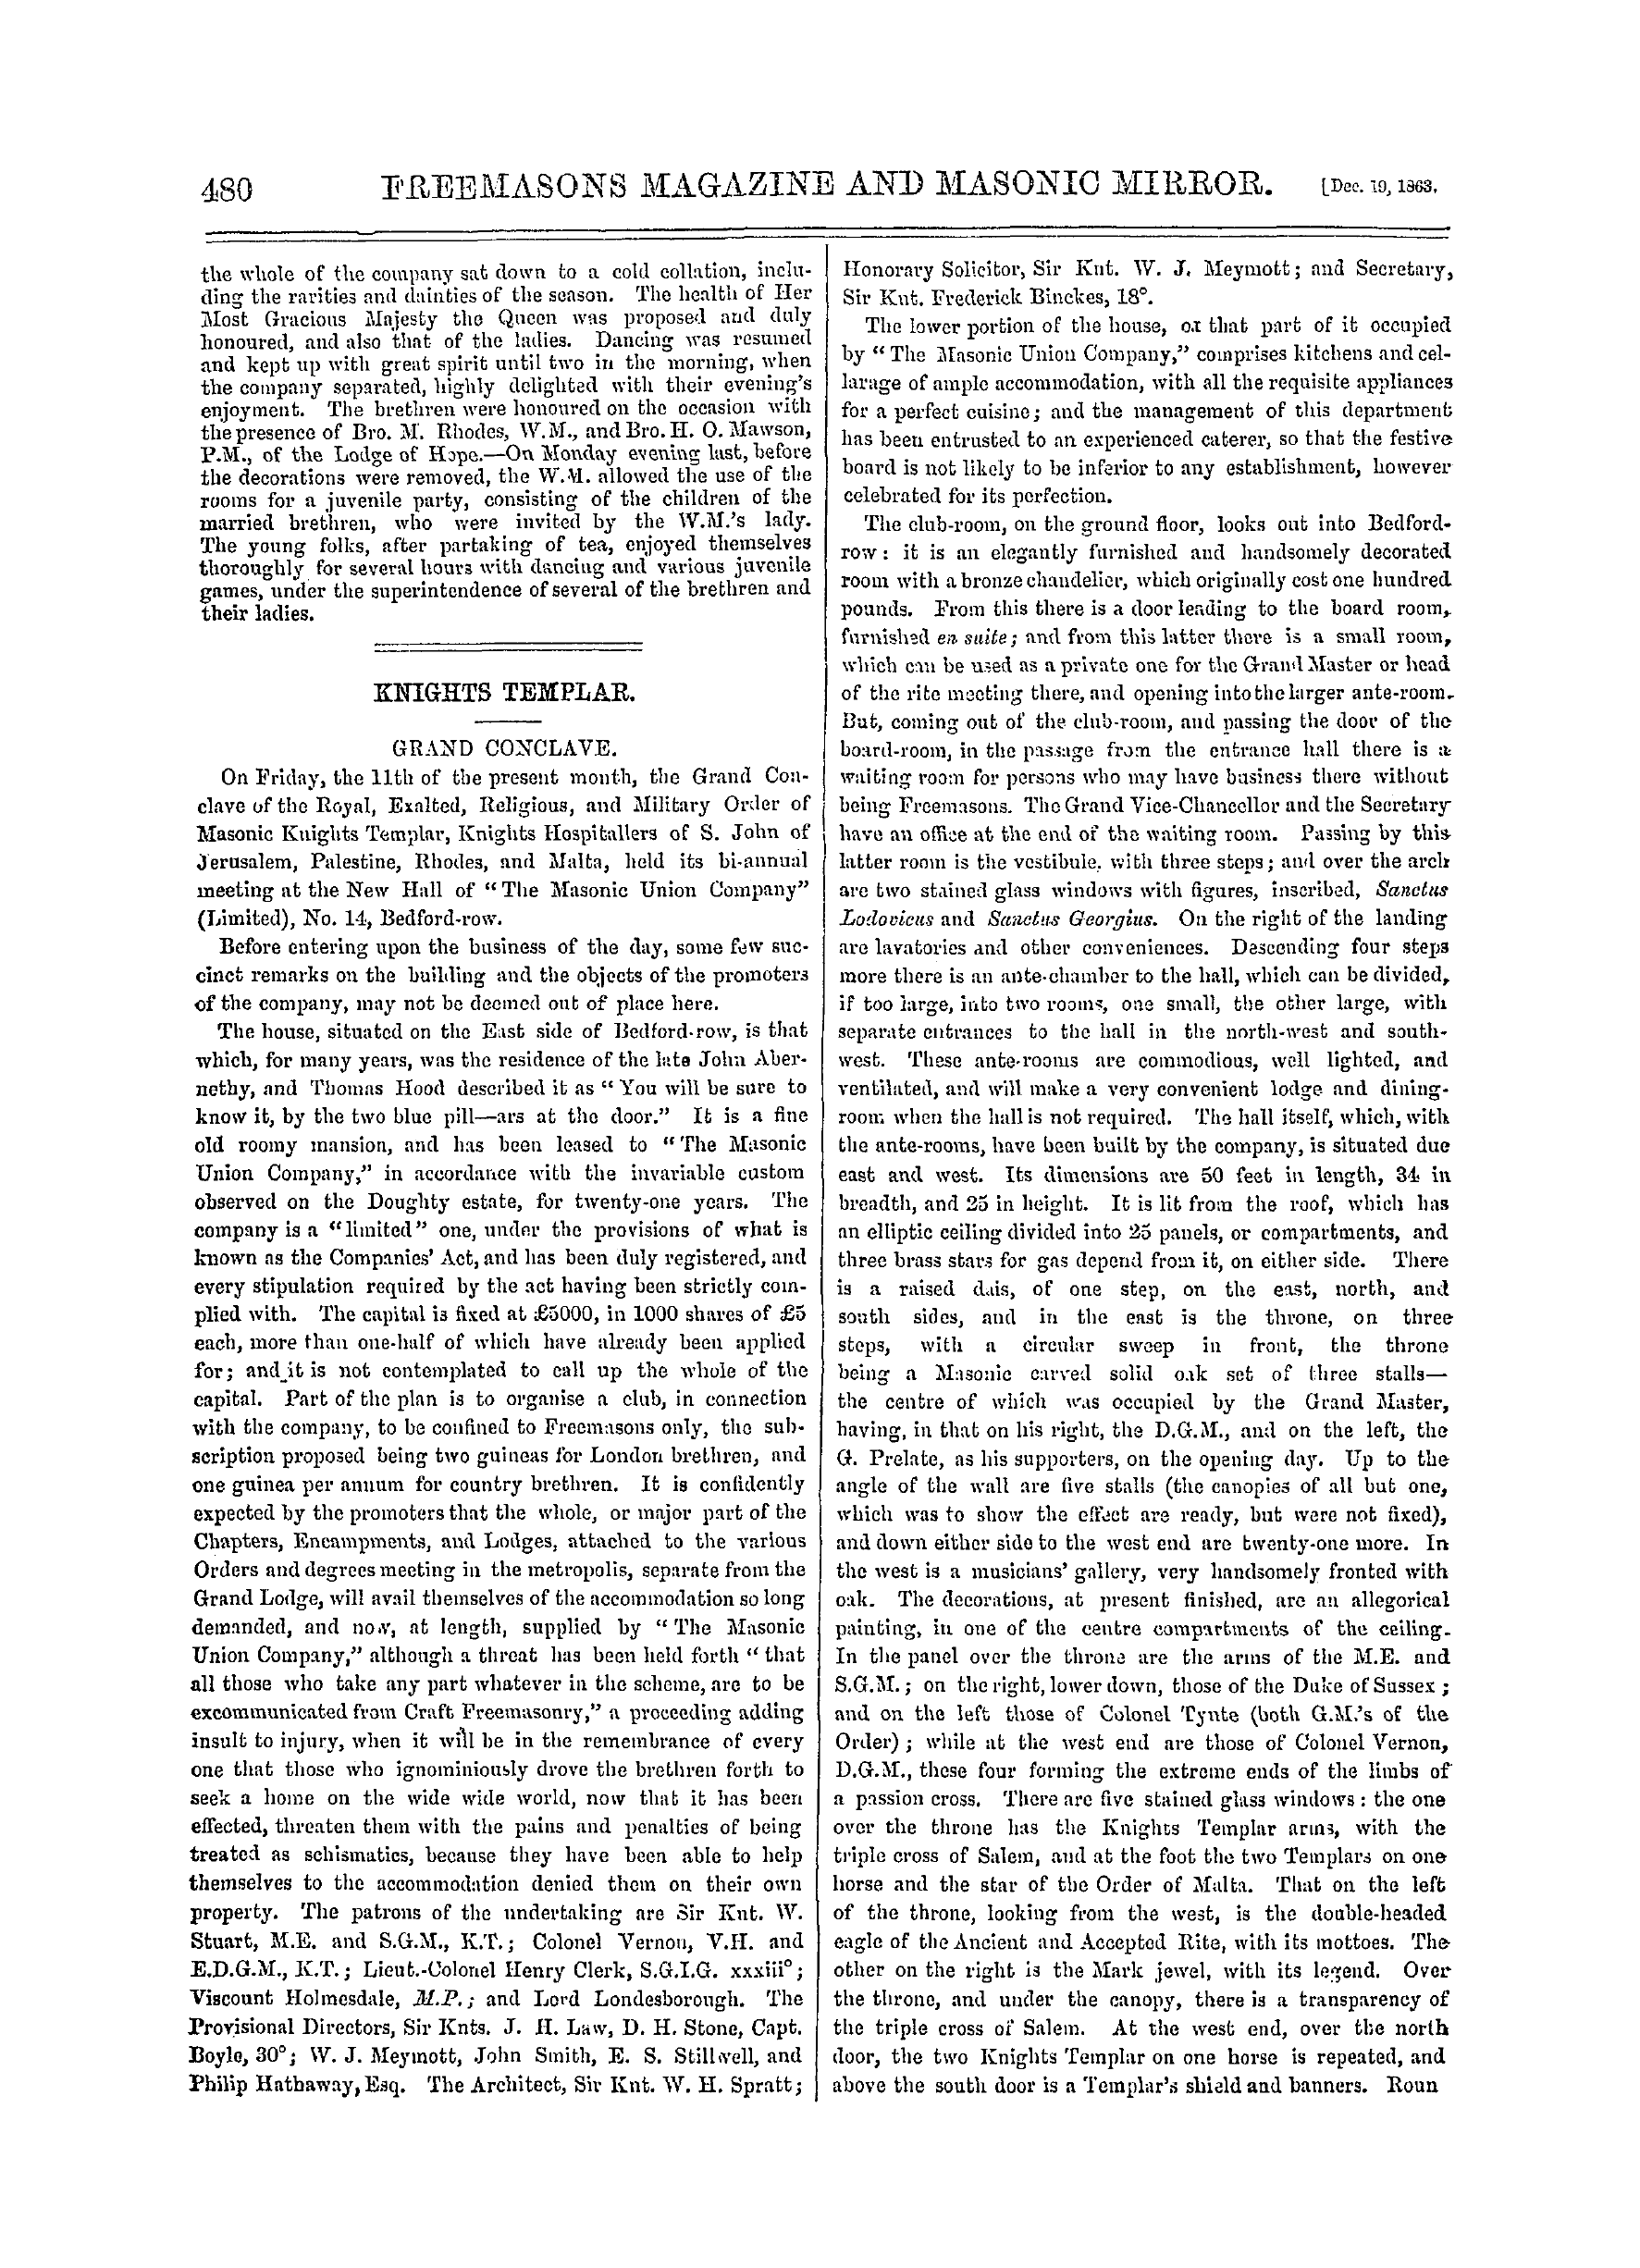 The Freemasons' Monthly Magazine: 1863-12-19 - Provincial.